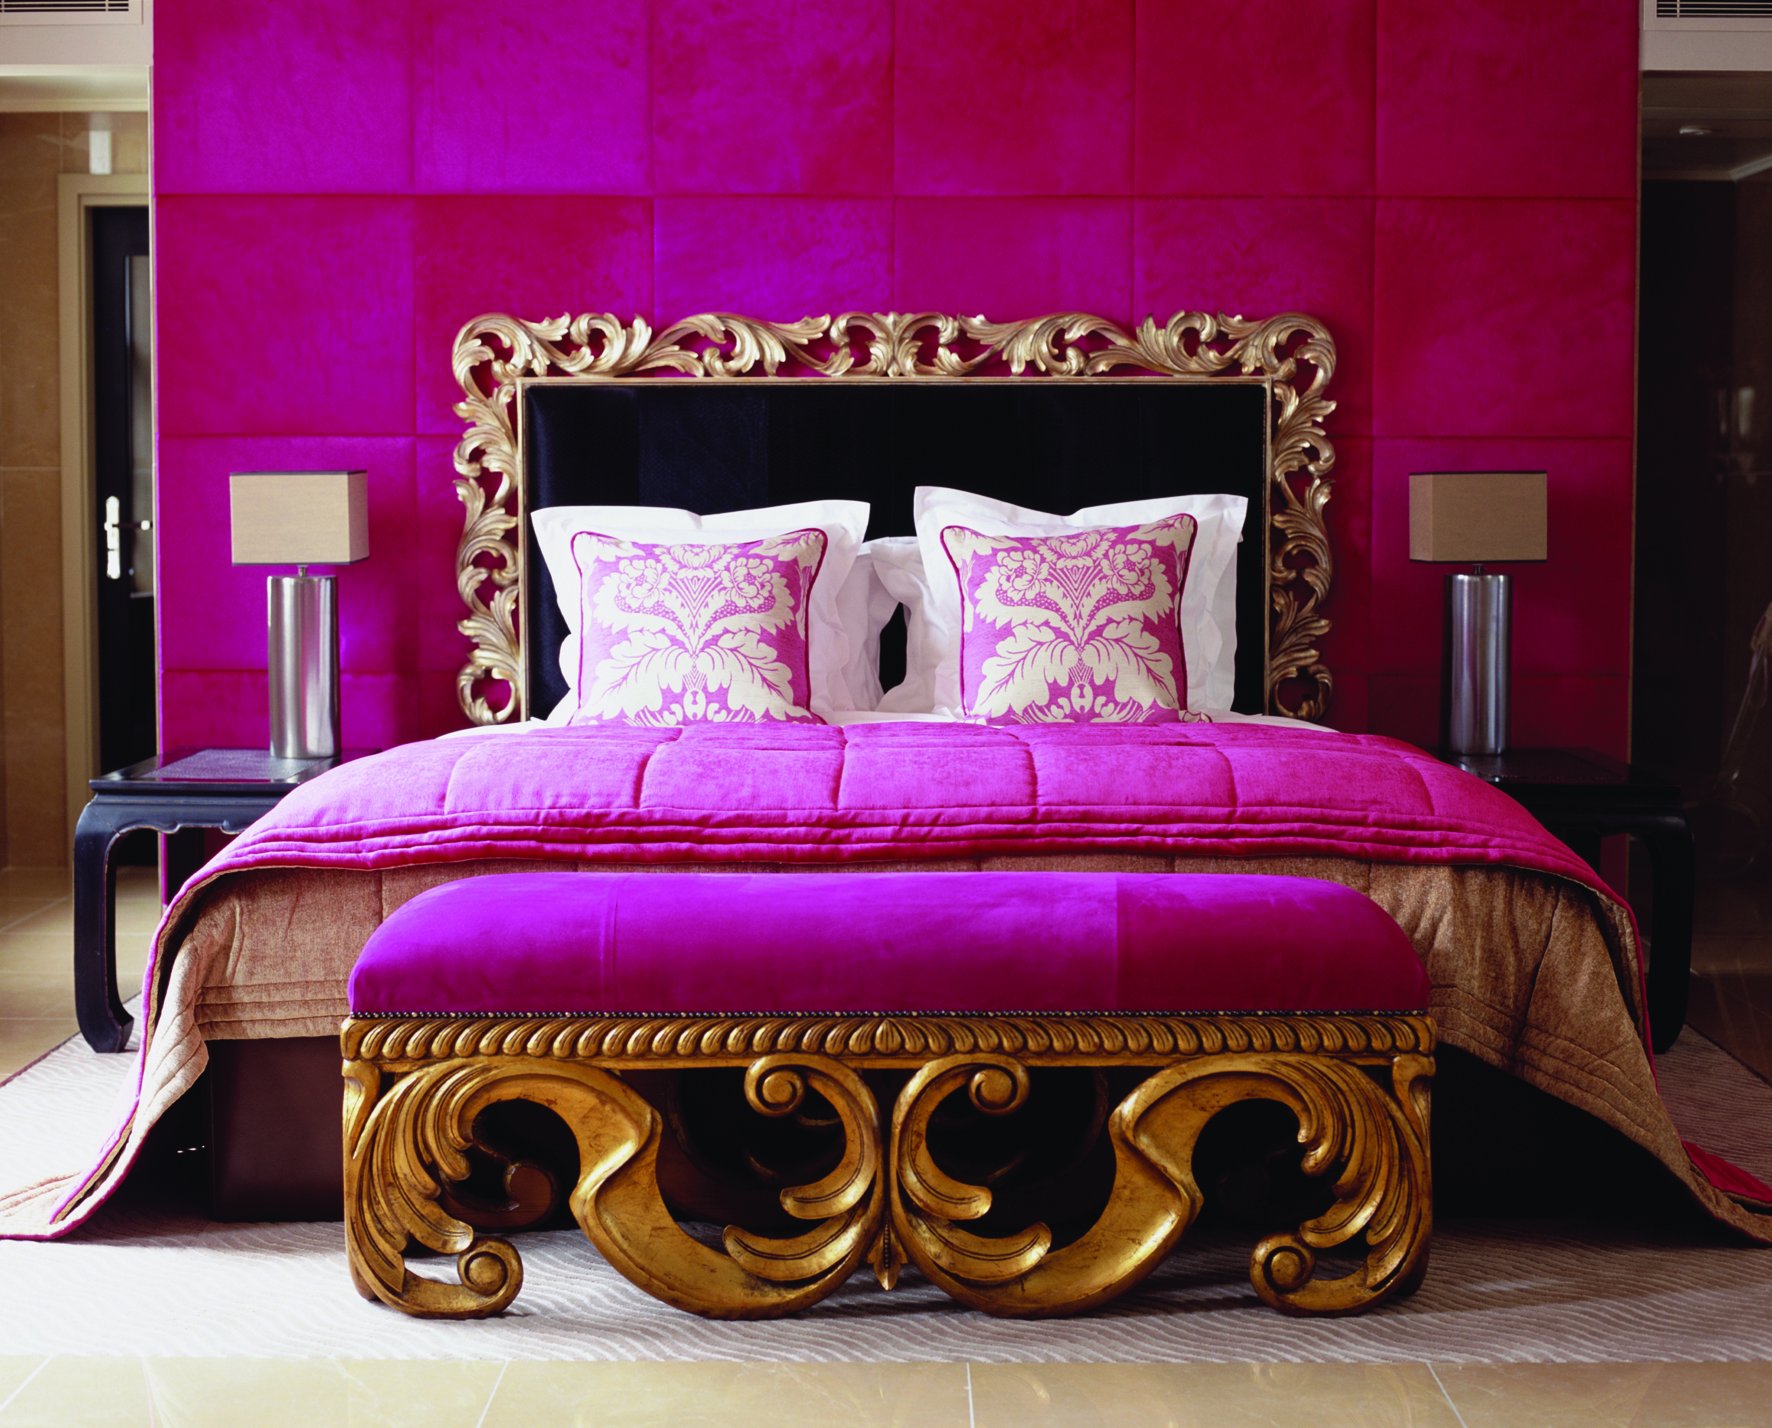 Decorations Idea For A Humble Gold Bedroom